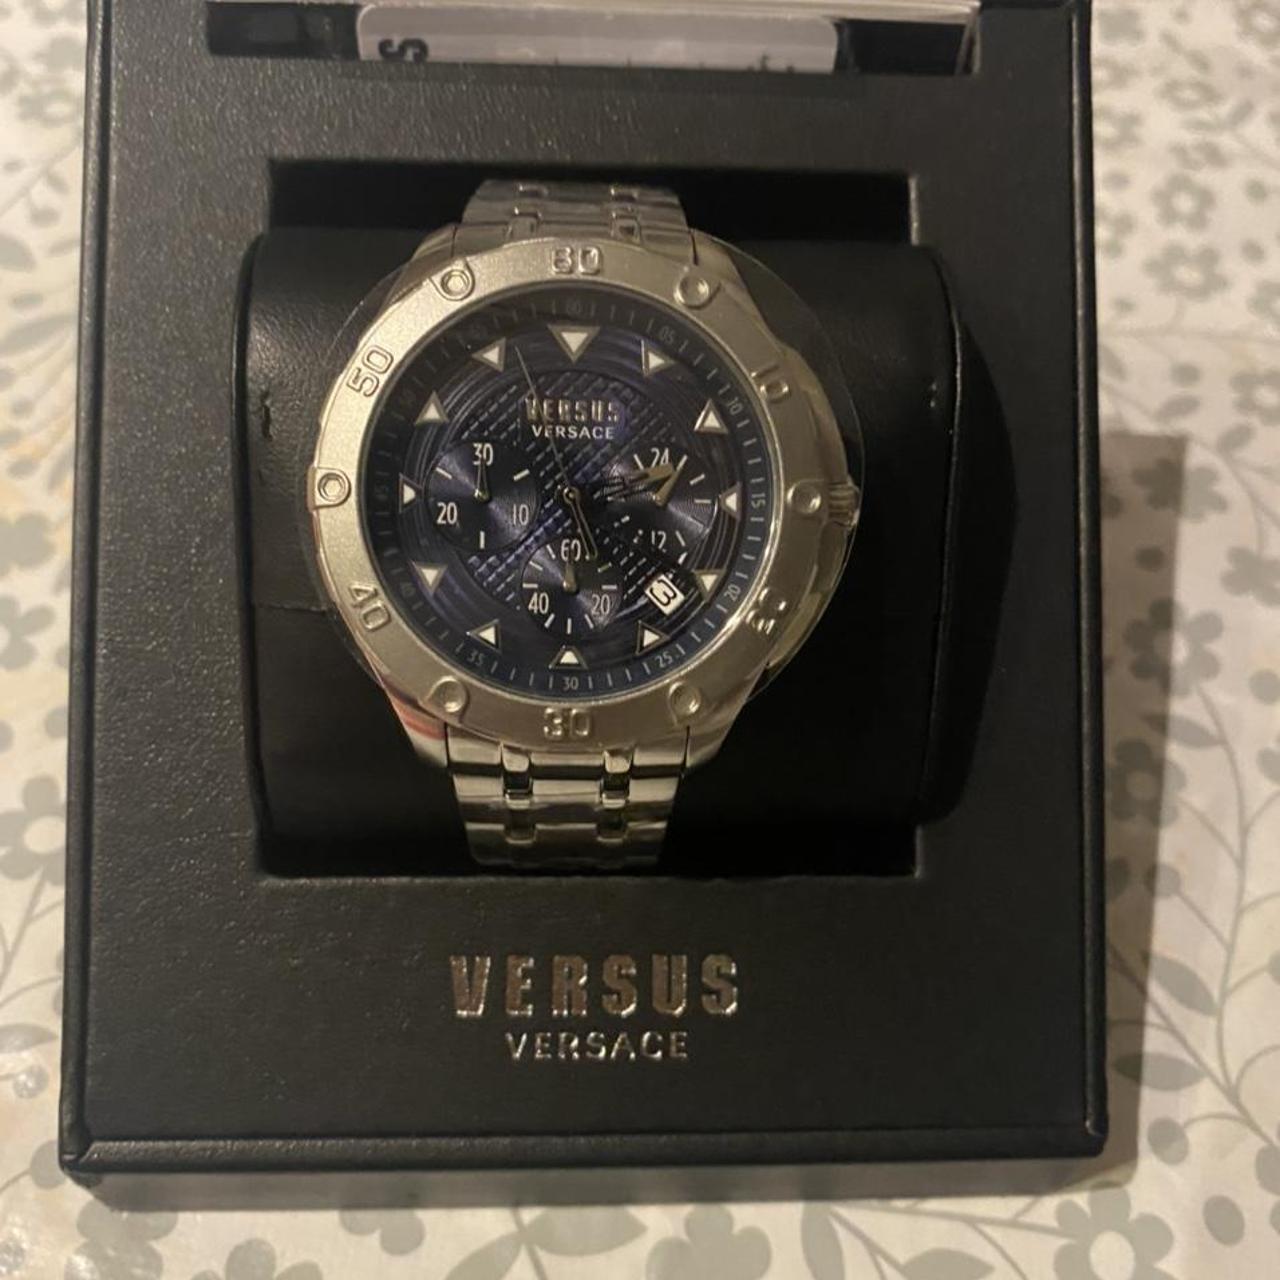 Men’s Versace watch brand mew retail price 174 - Depop